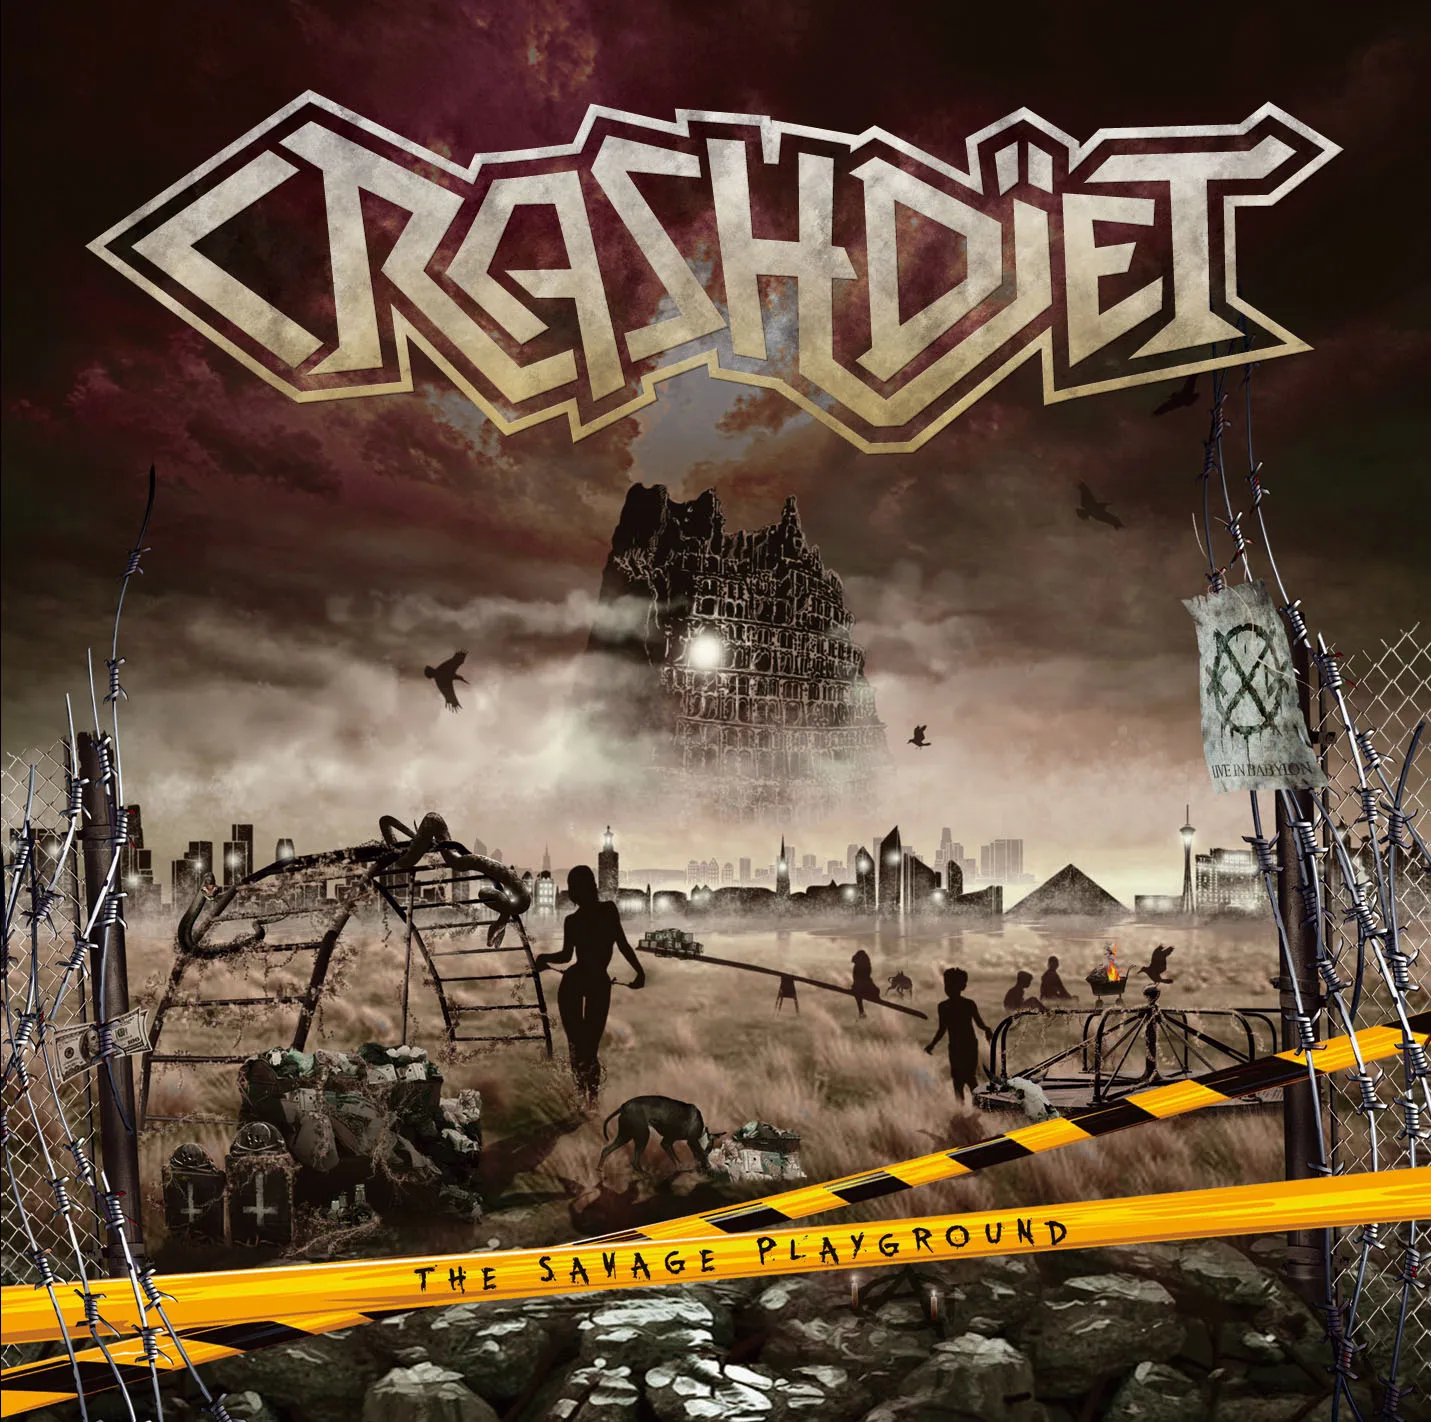 Archive – Album review: CrashDiet – The Savage Playground